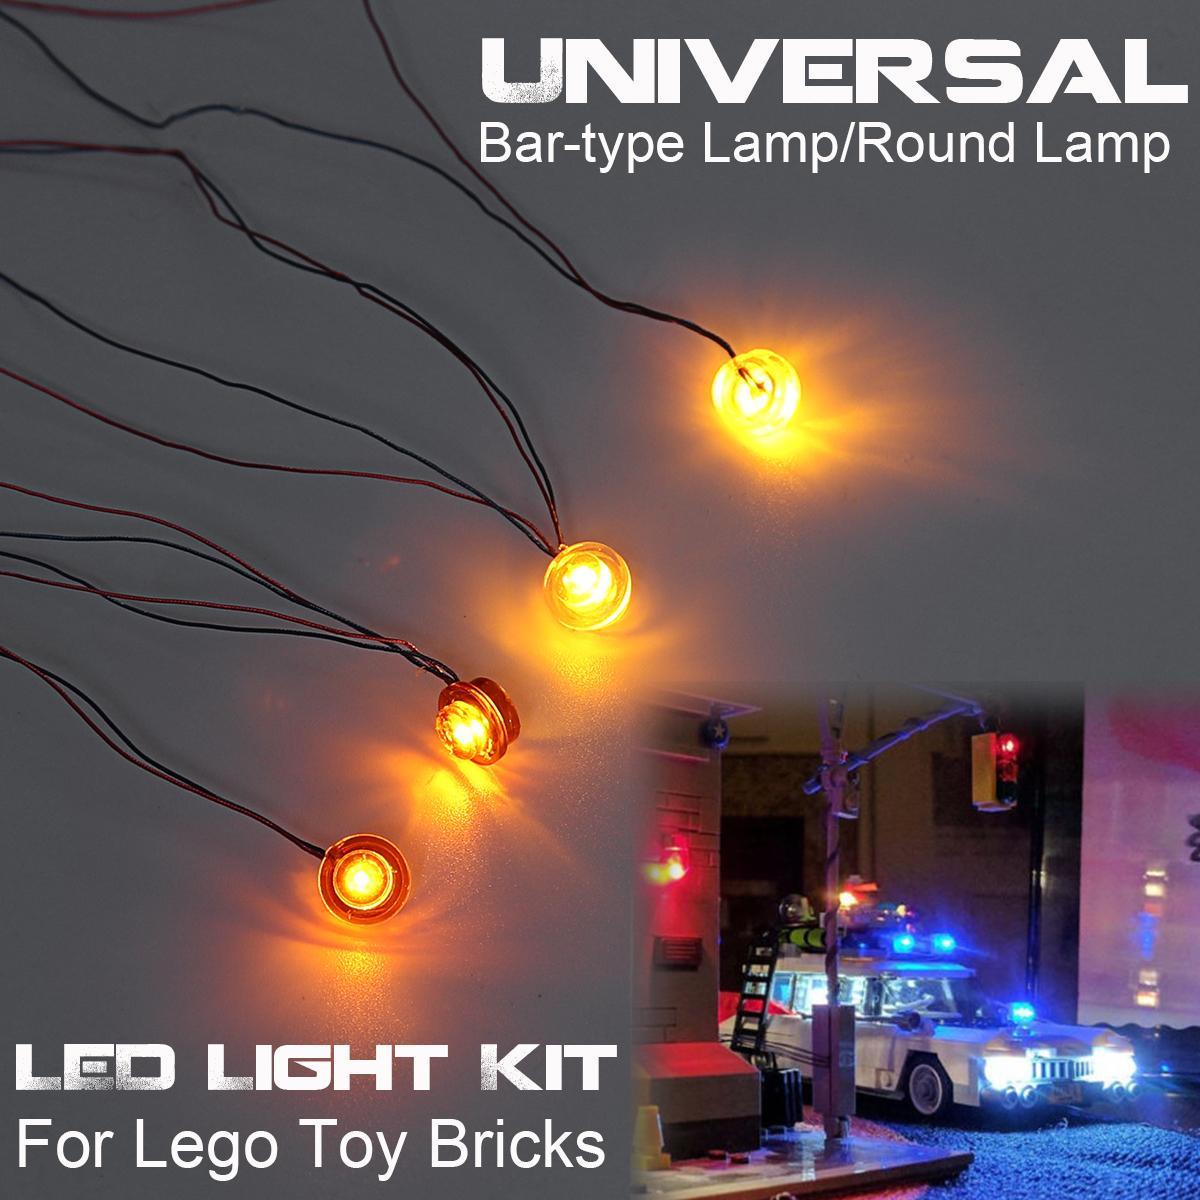 Universal LED Light Lighting Kit For Lego Toy Bricks Bar-type Lamp/Round Lamp